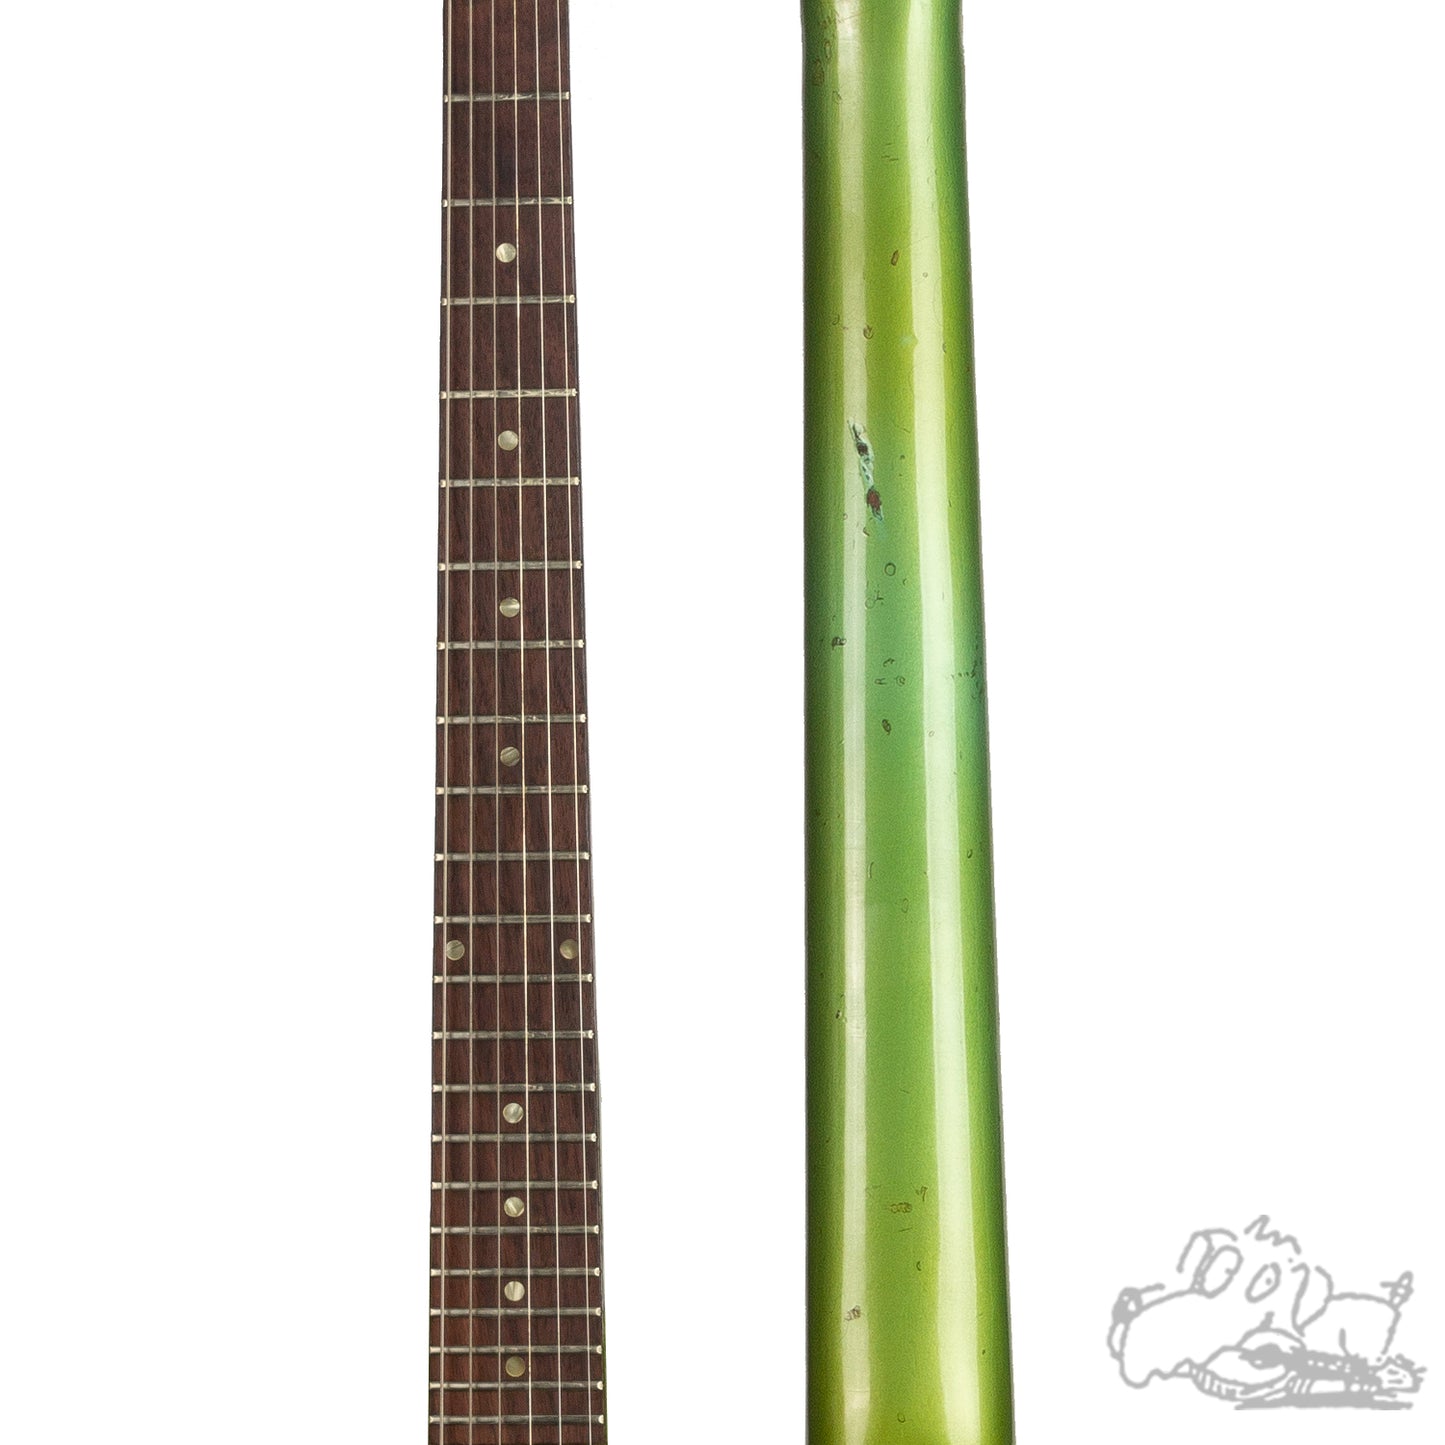 1966 Gibson Firebird III